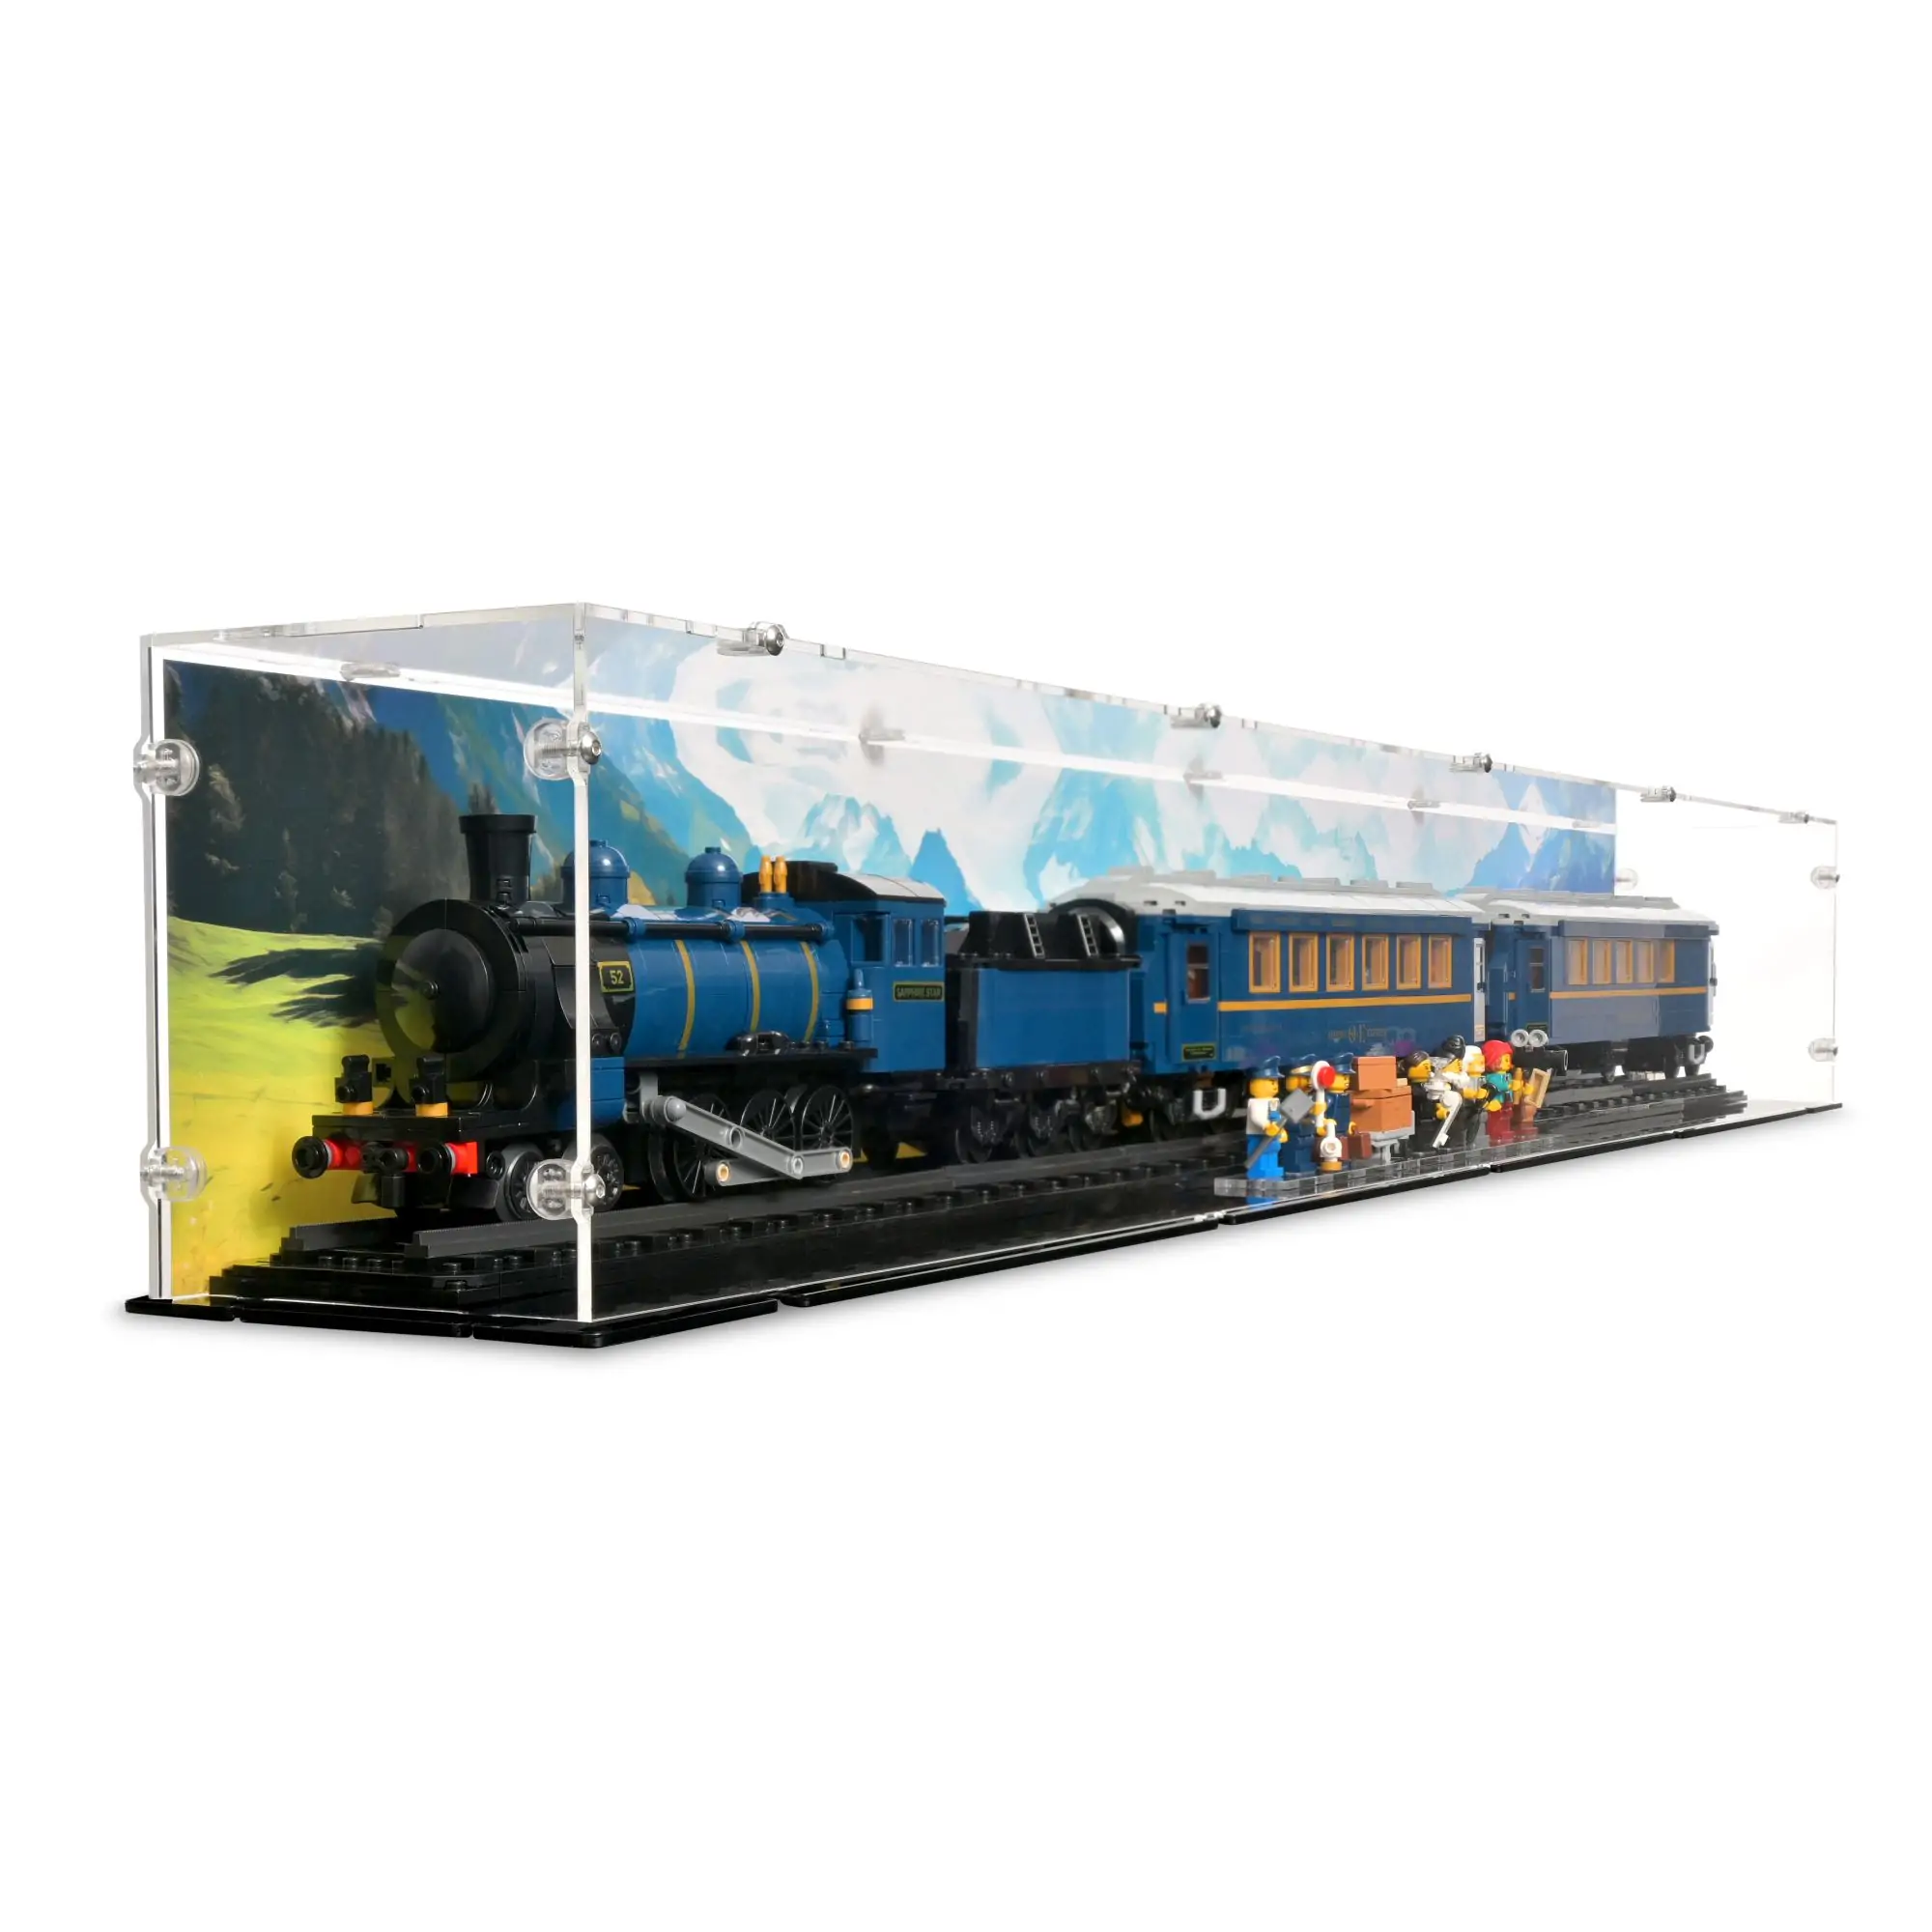 LEGO IDEAS - The Orient Express, a Legendary Train